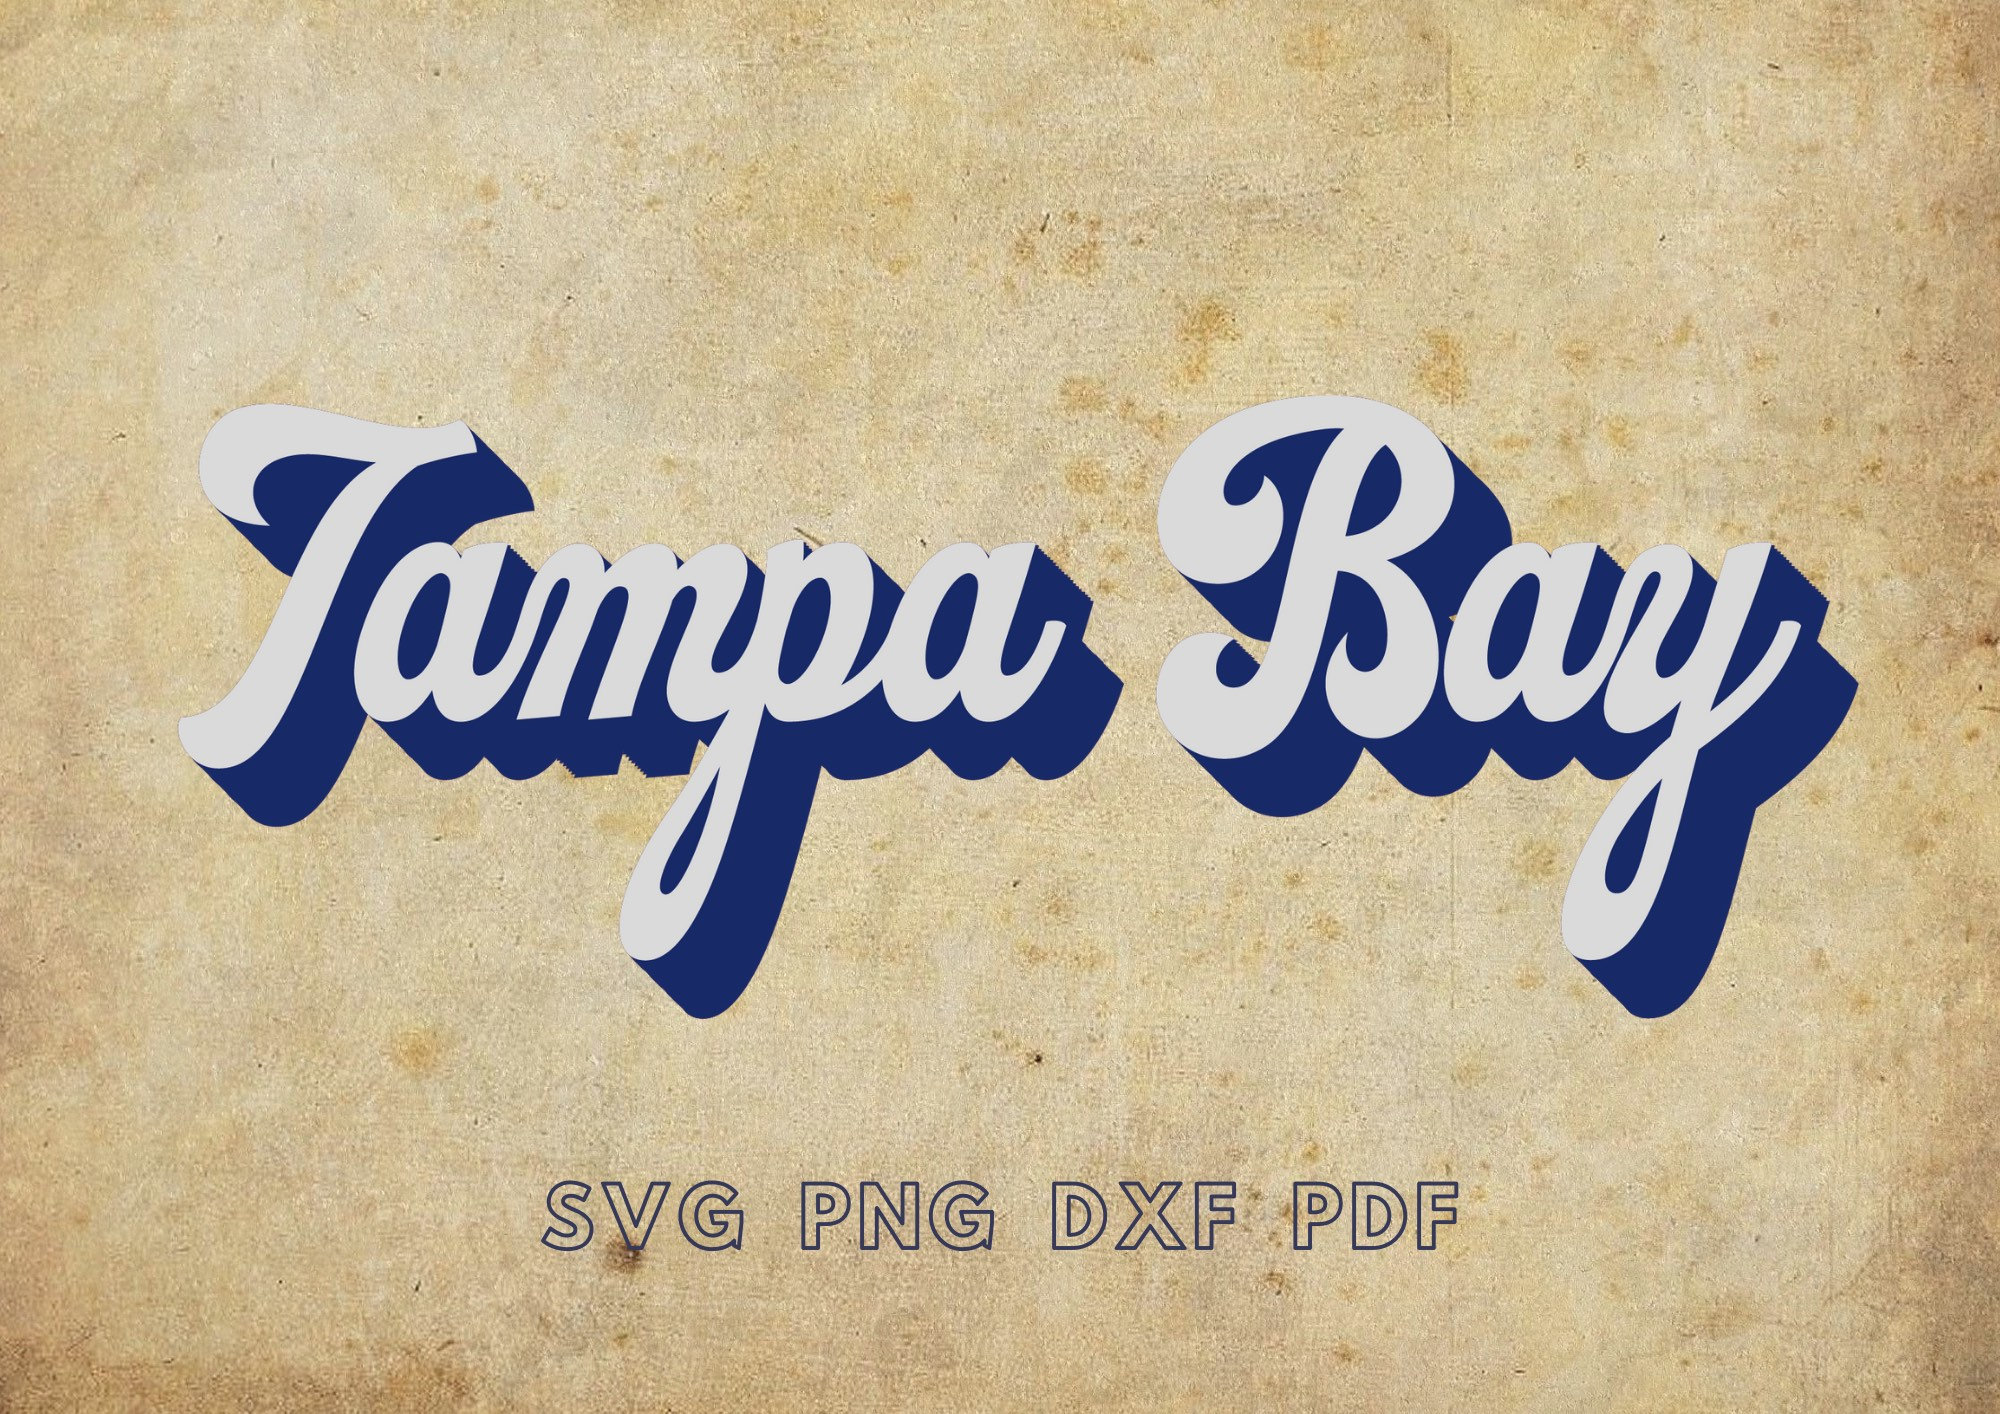 Tampa Bay Devil Rays Logo PNG Transparent & SVG Vector - Freebie Supply